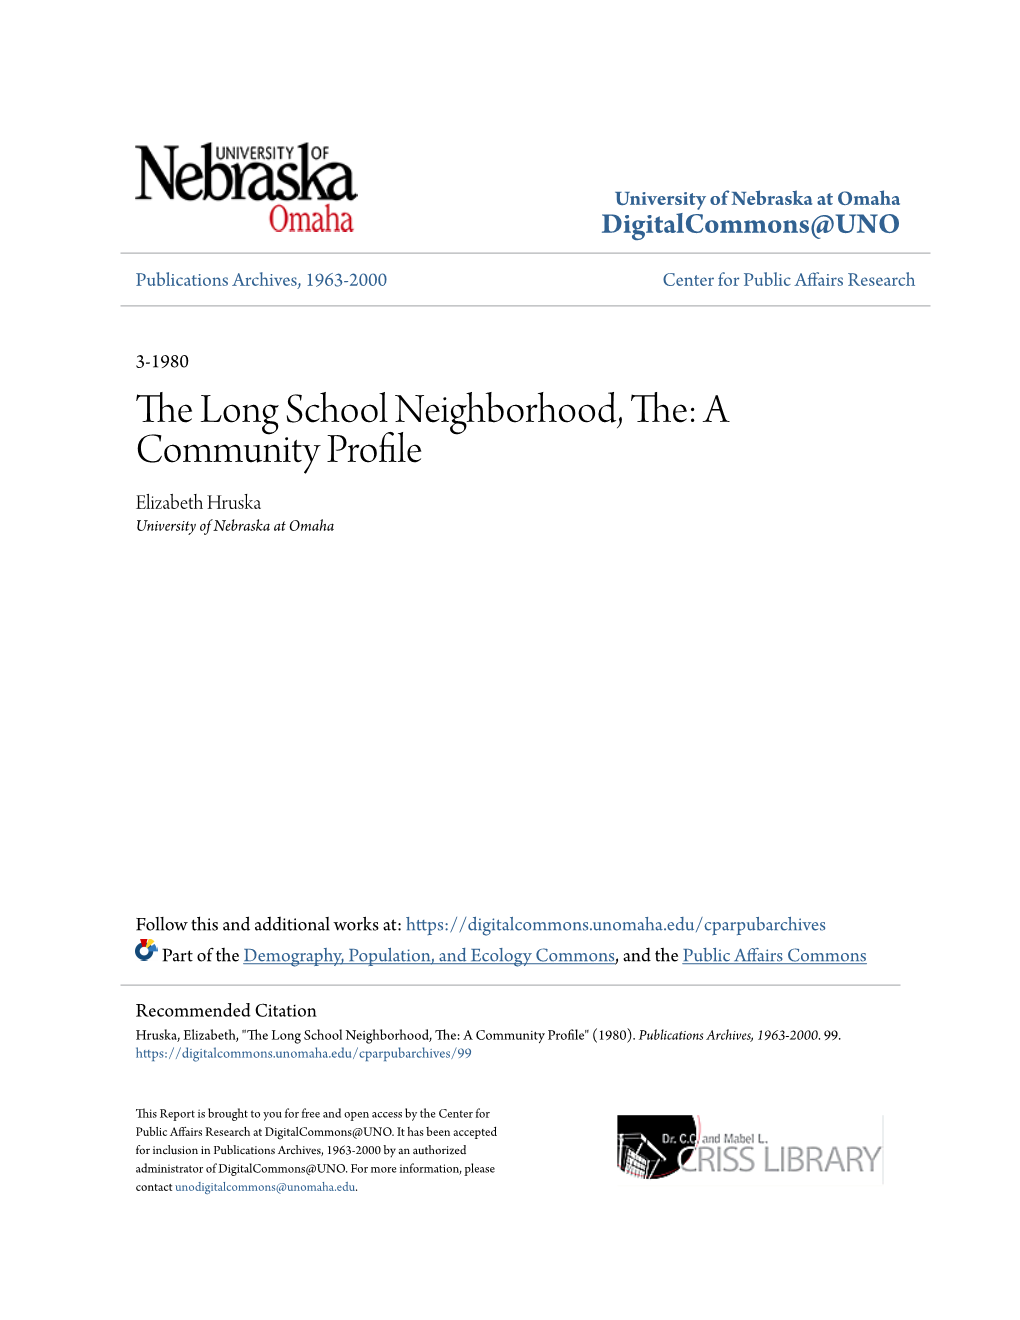 The Long School Neighborhood, The: a Community Profile Elizabeth Hruska University of Nebraska at Omaha